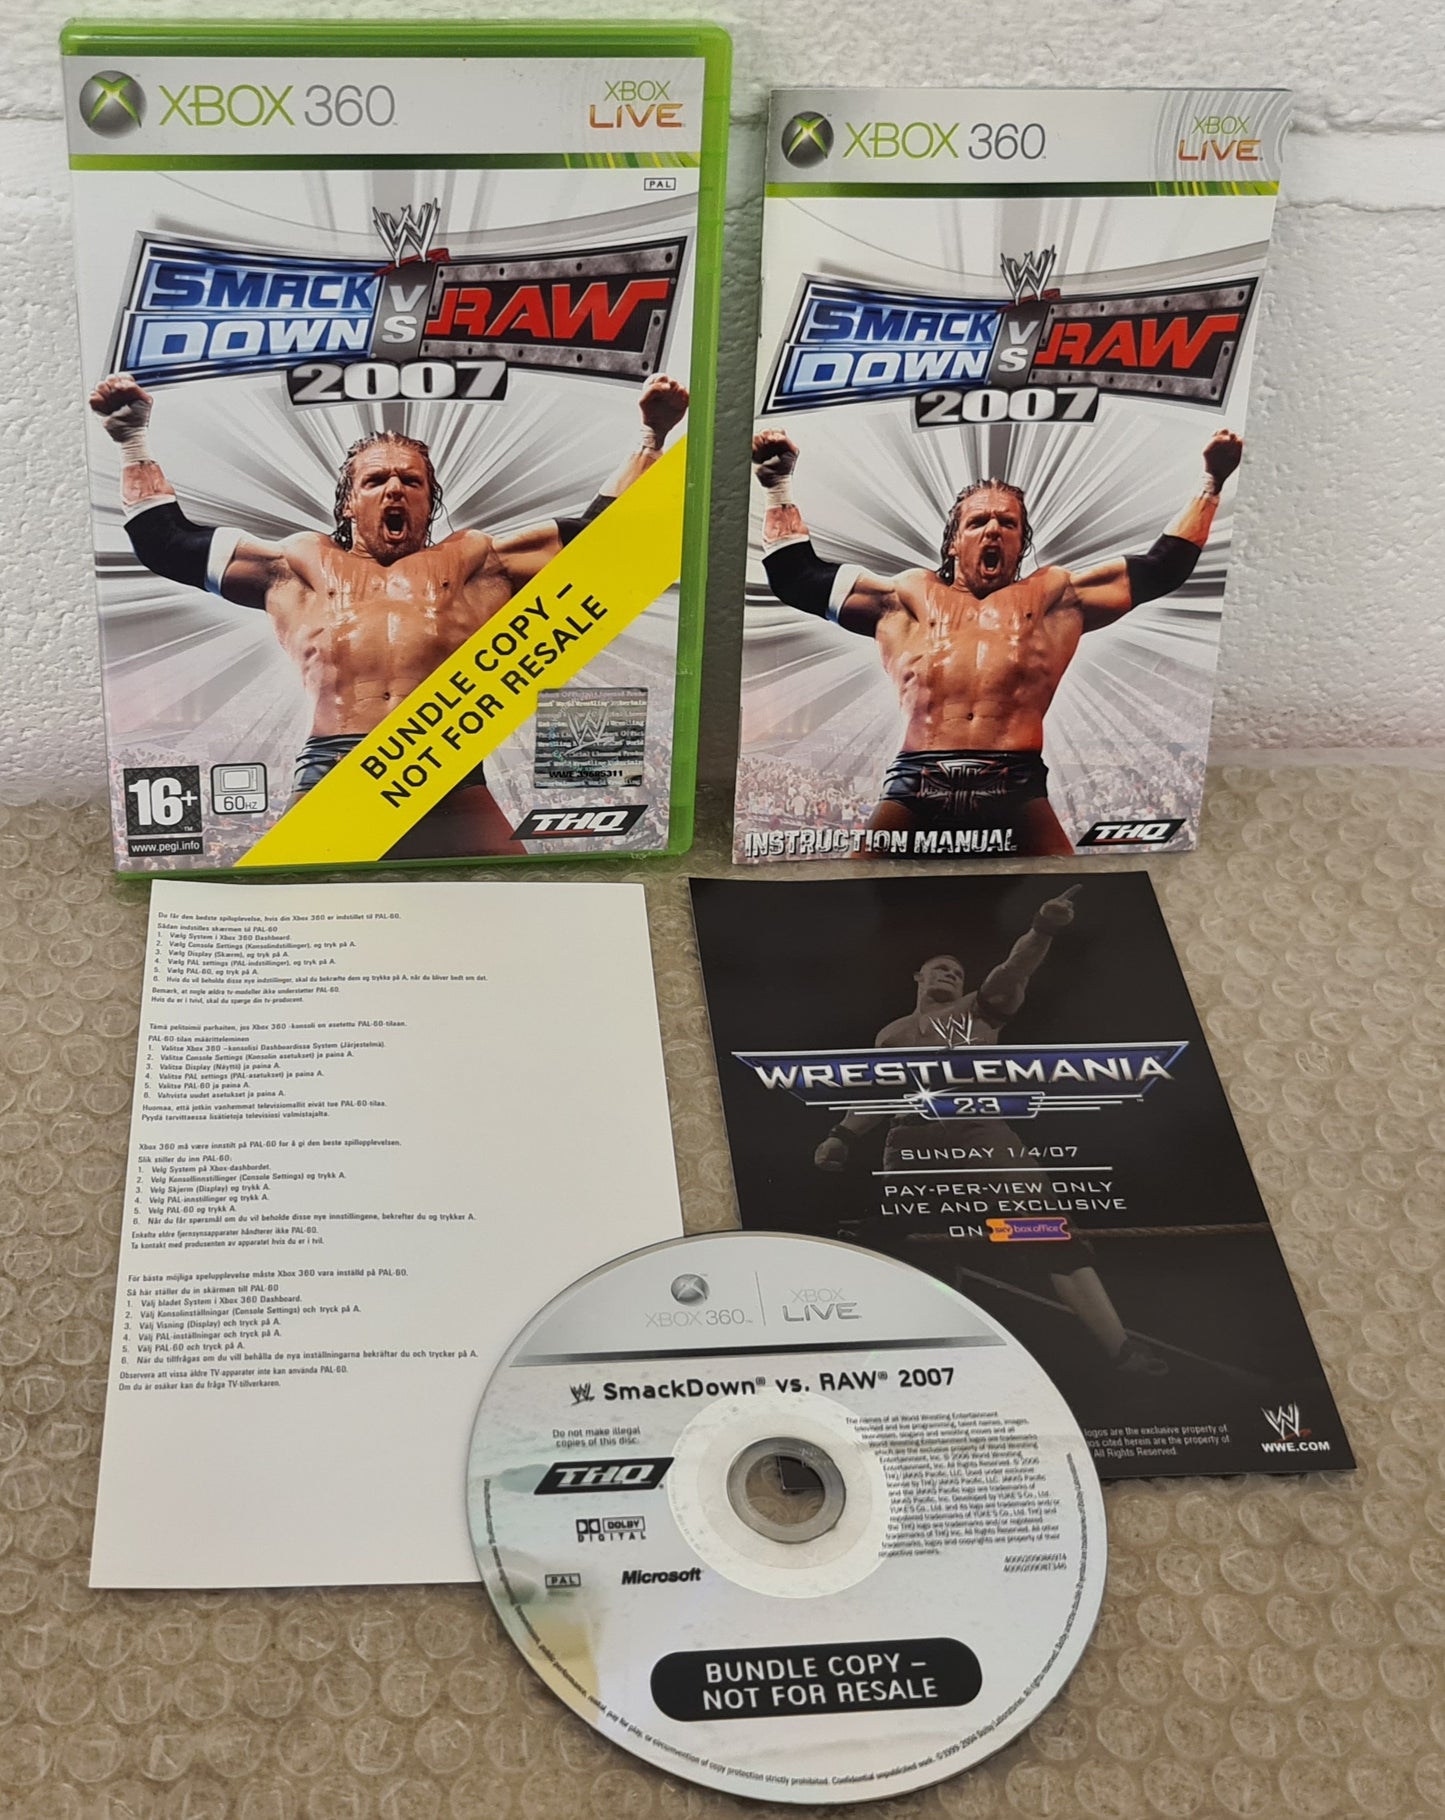 WWE Smackdown Vs Raw 2007 Bundle Copy not for Resale Microsoft Xbox 360 Game